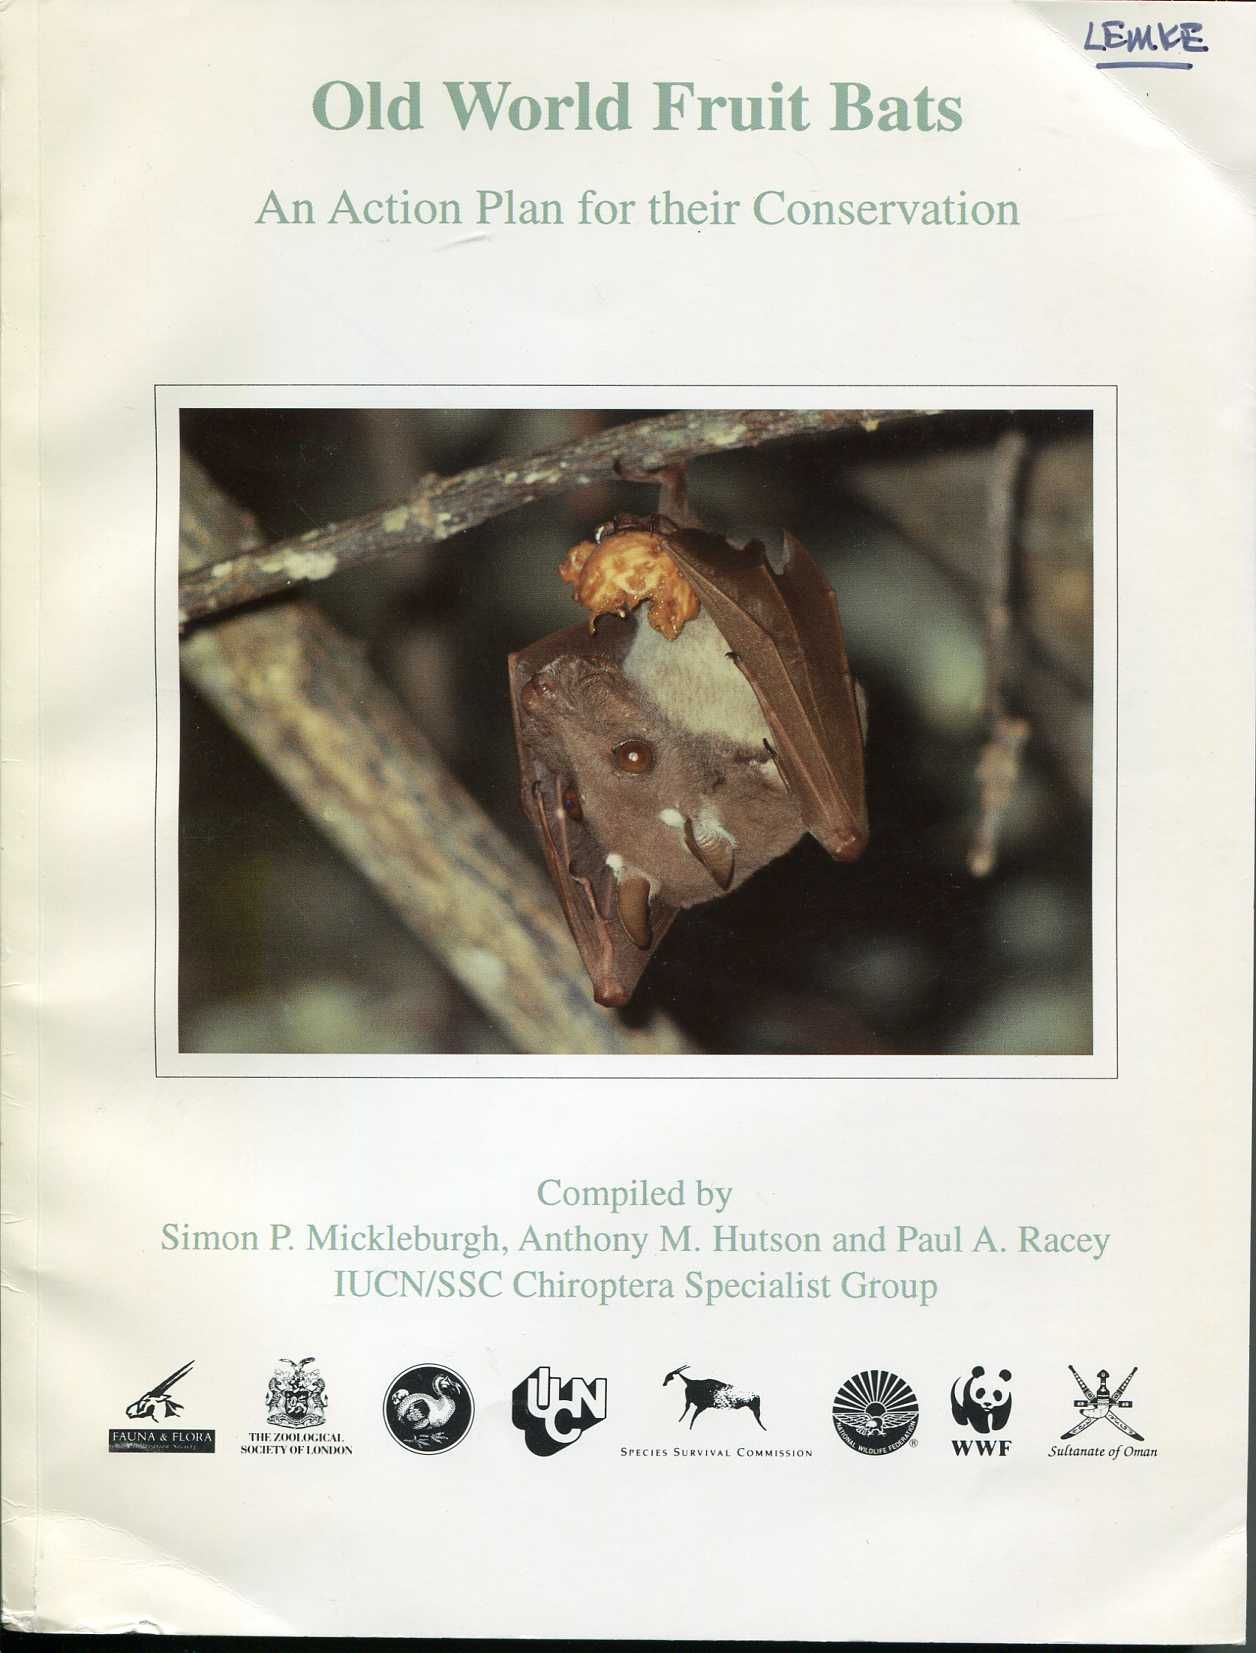 Old World Fruit Bats: An Action Plan for their Conservation - Mickleburgh, Simon P. et al.